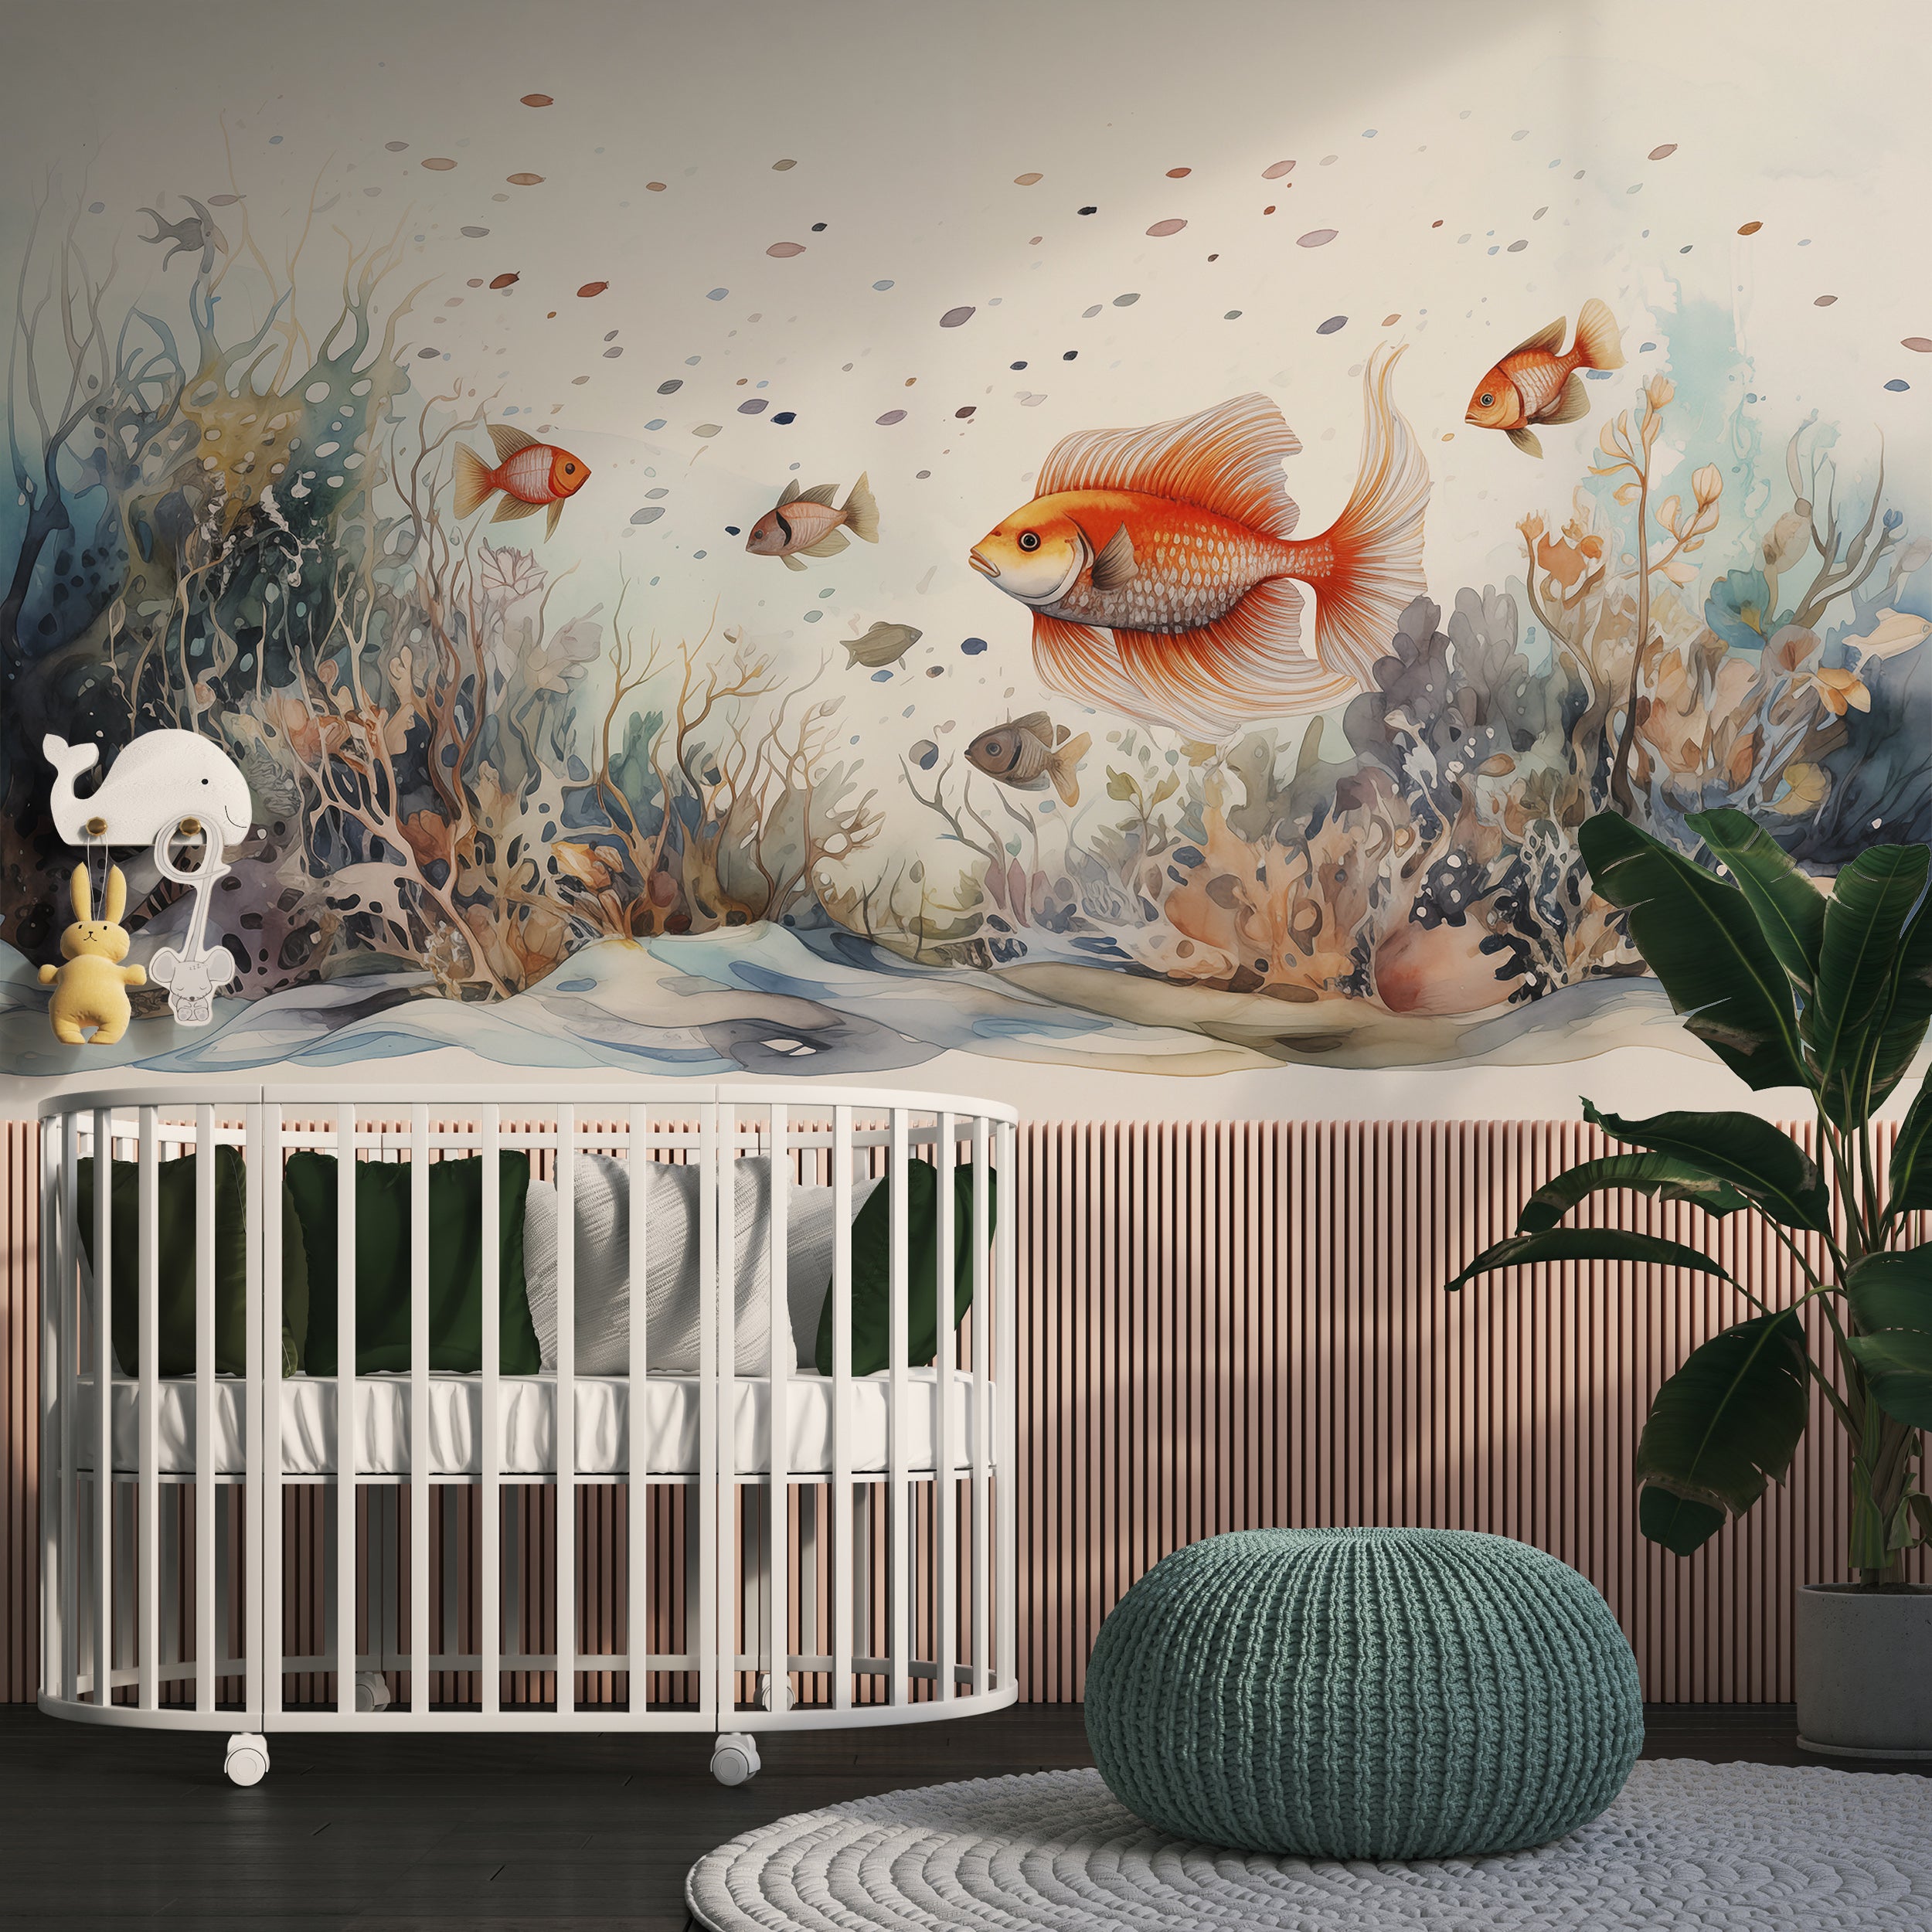 Underwater Life Wall Mural for Nursery